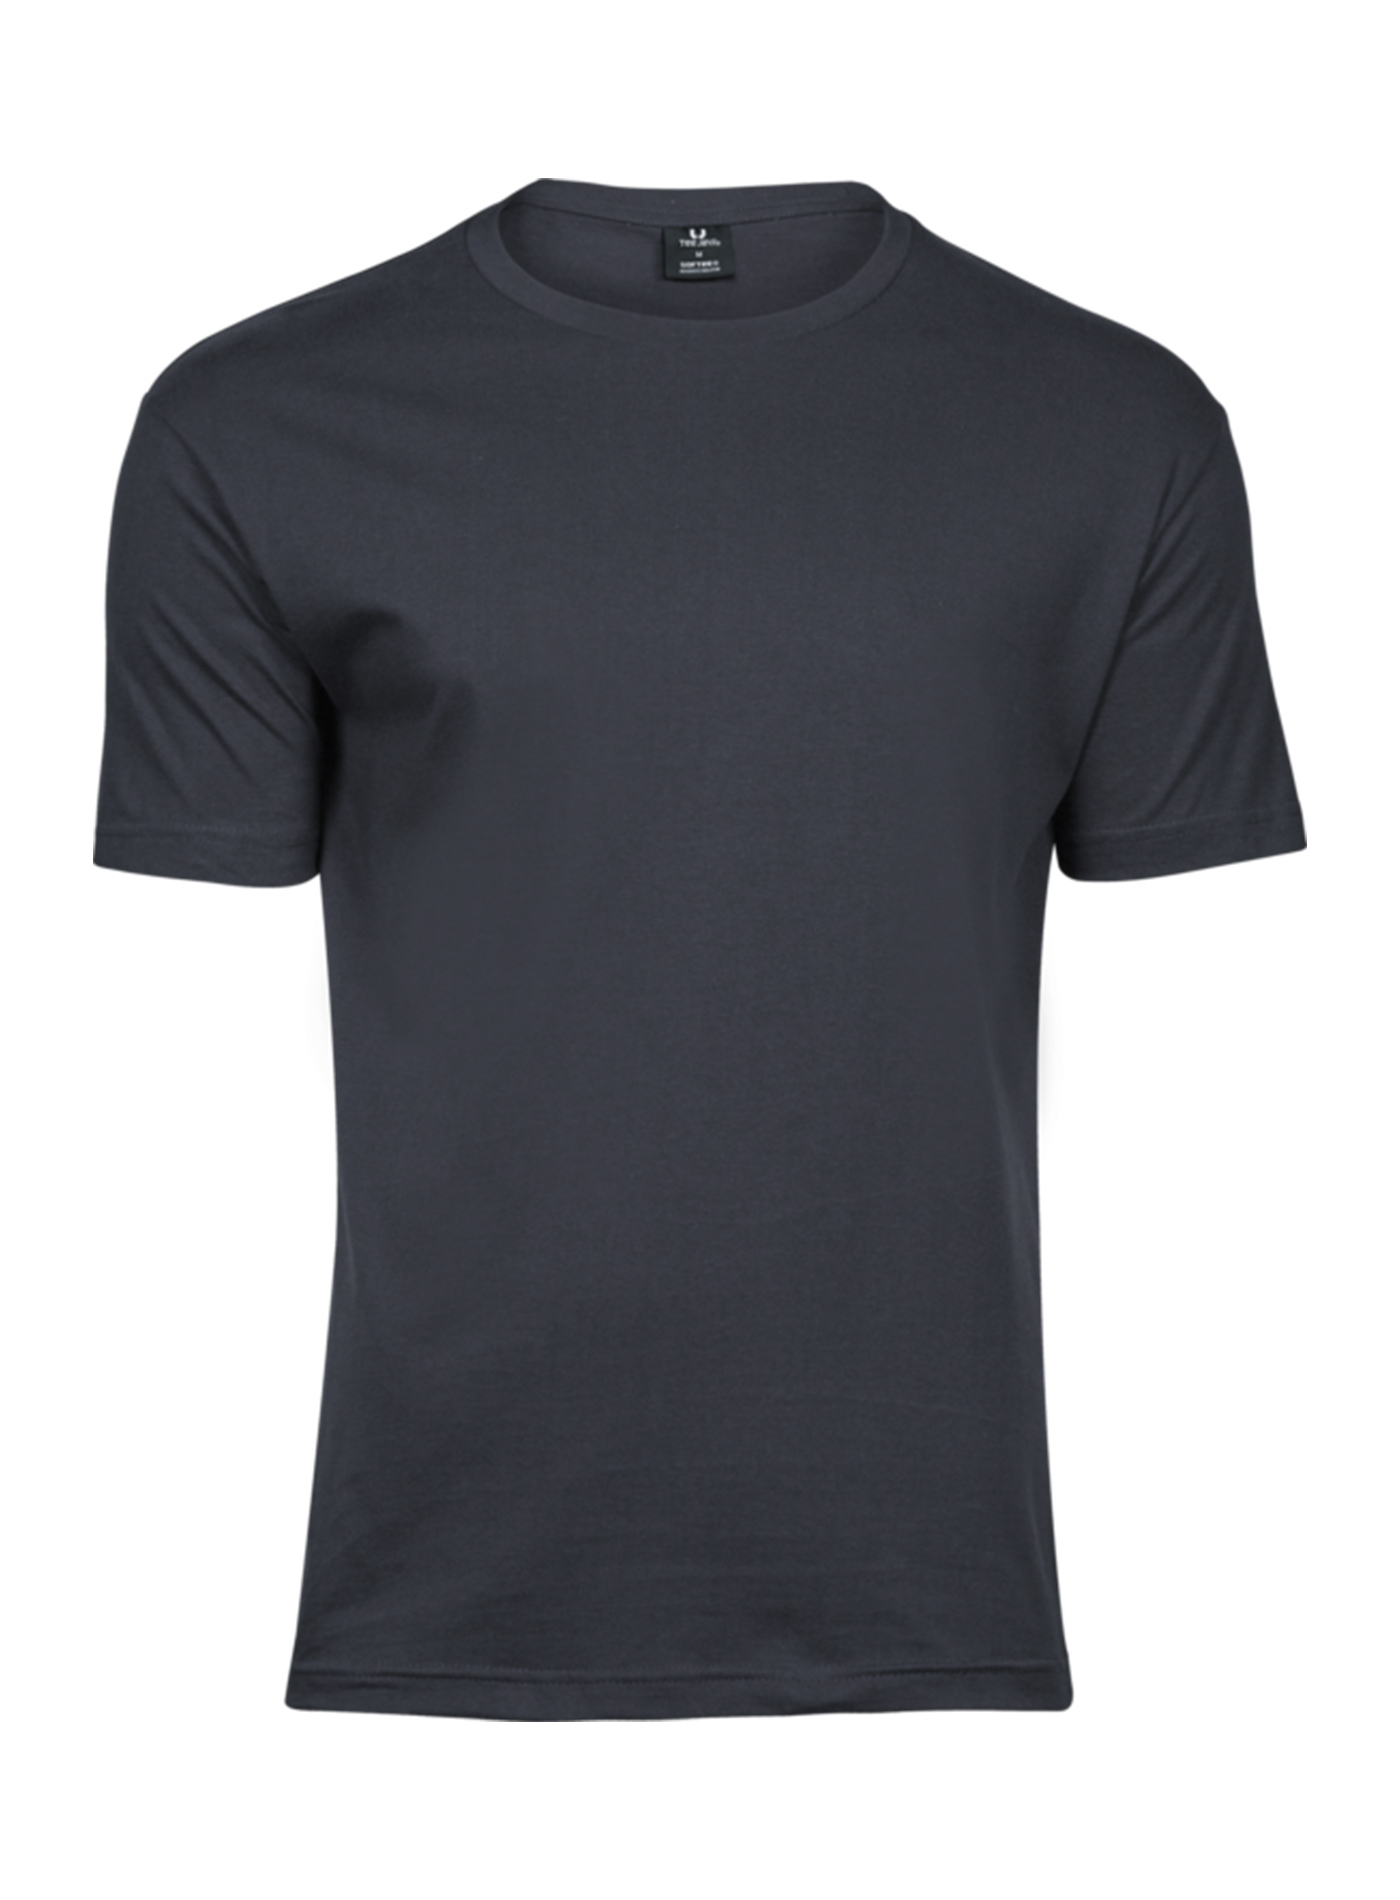 Pánské tričko Fashion Tee Jays - Tmavě šedá XL